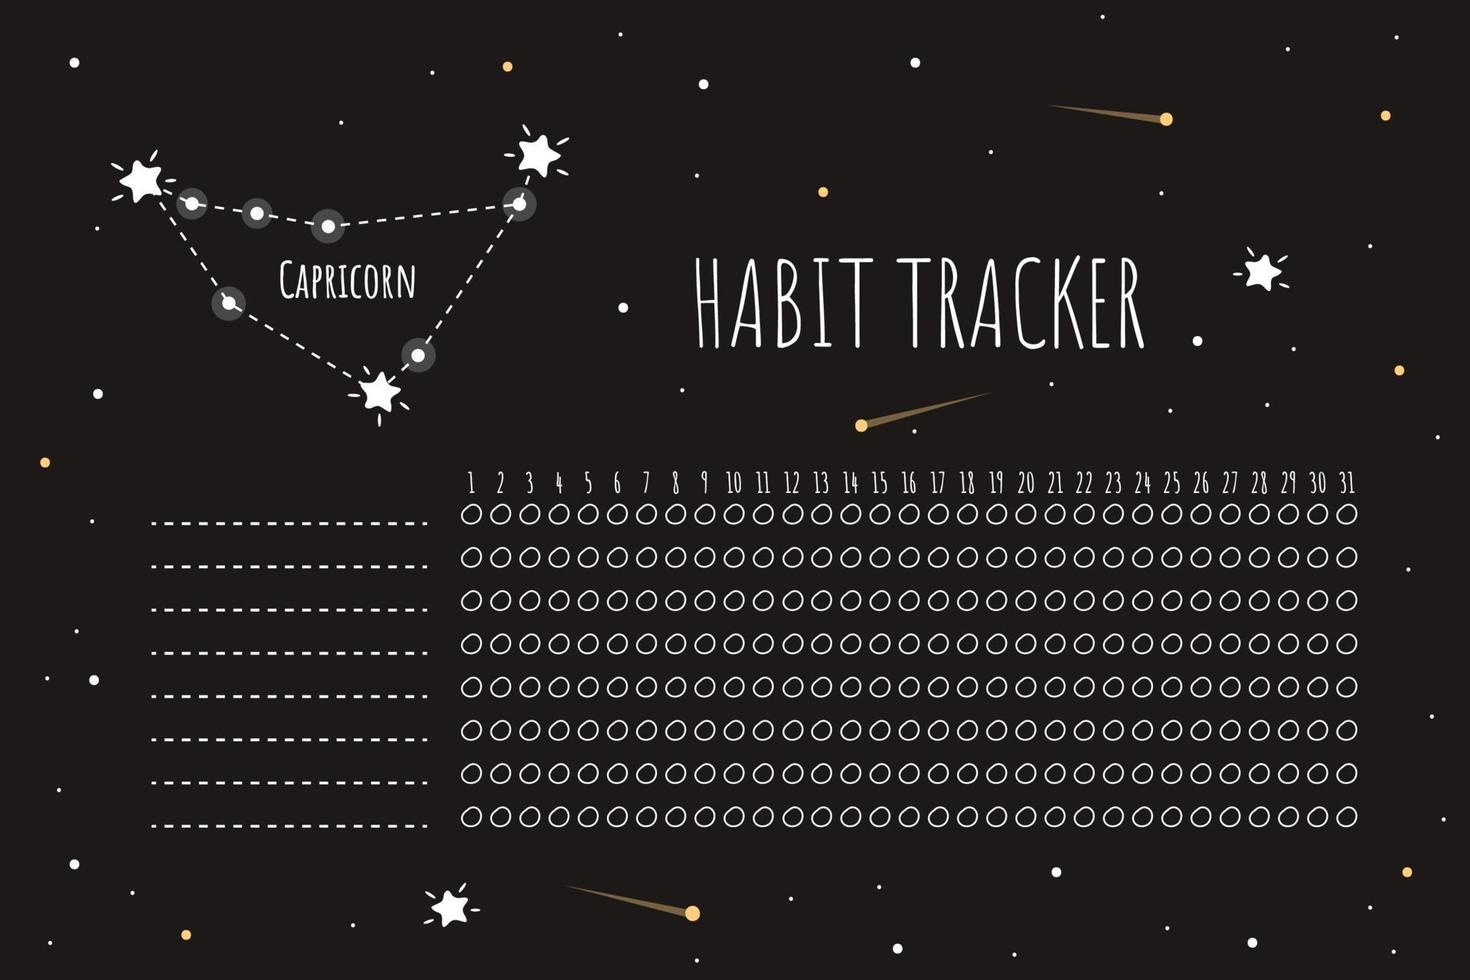 Habit tracker template with carpricorn sign vector